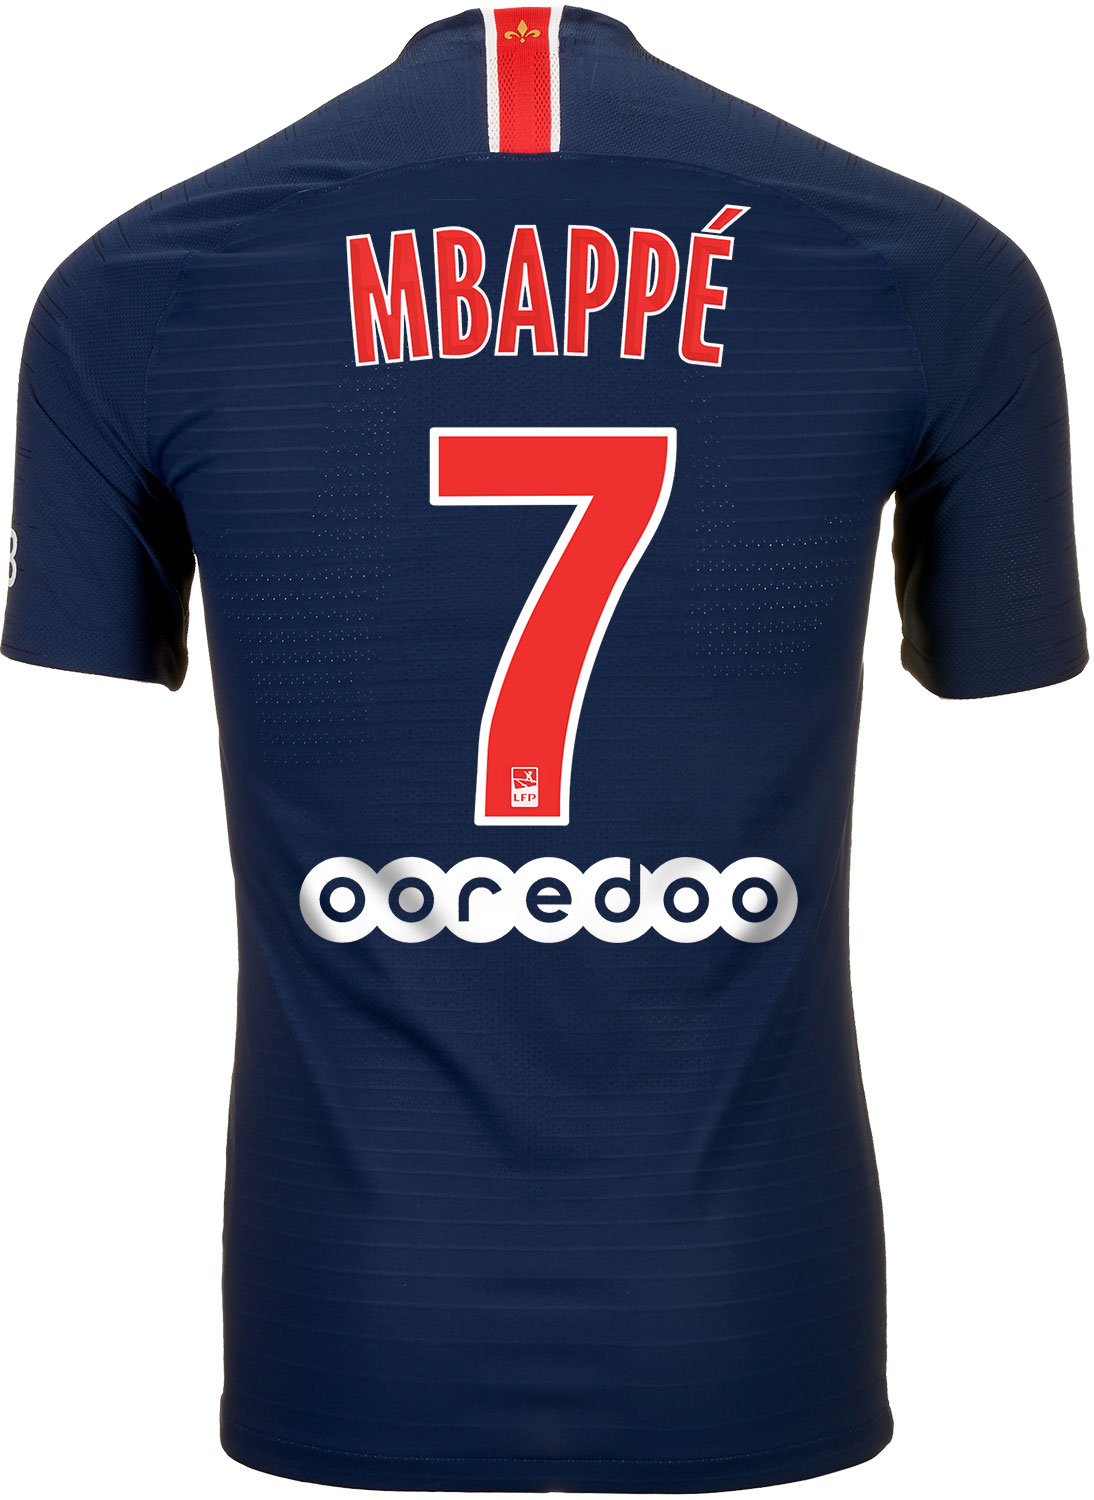 Nike Kylian Mbappe PSG Home Match Jersey 2018-19 - SoccerPro